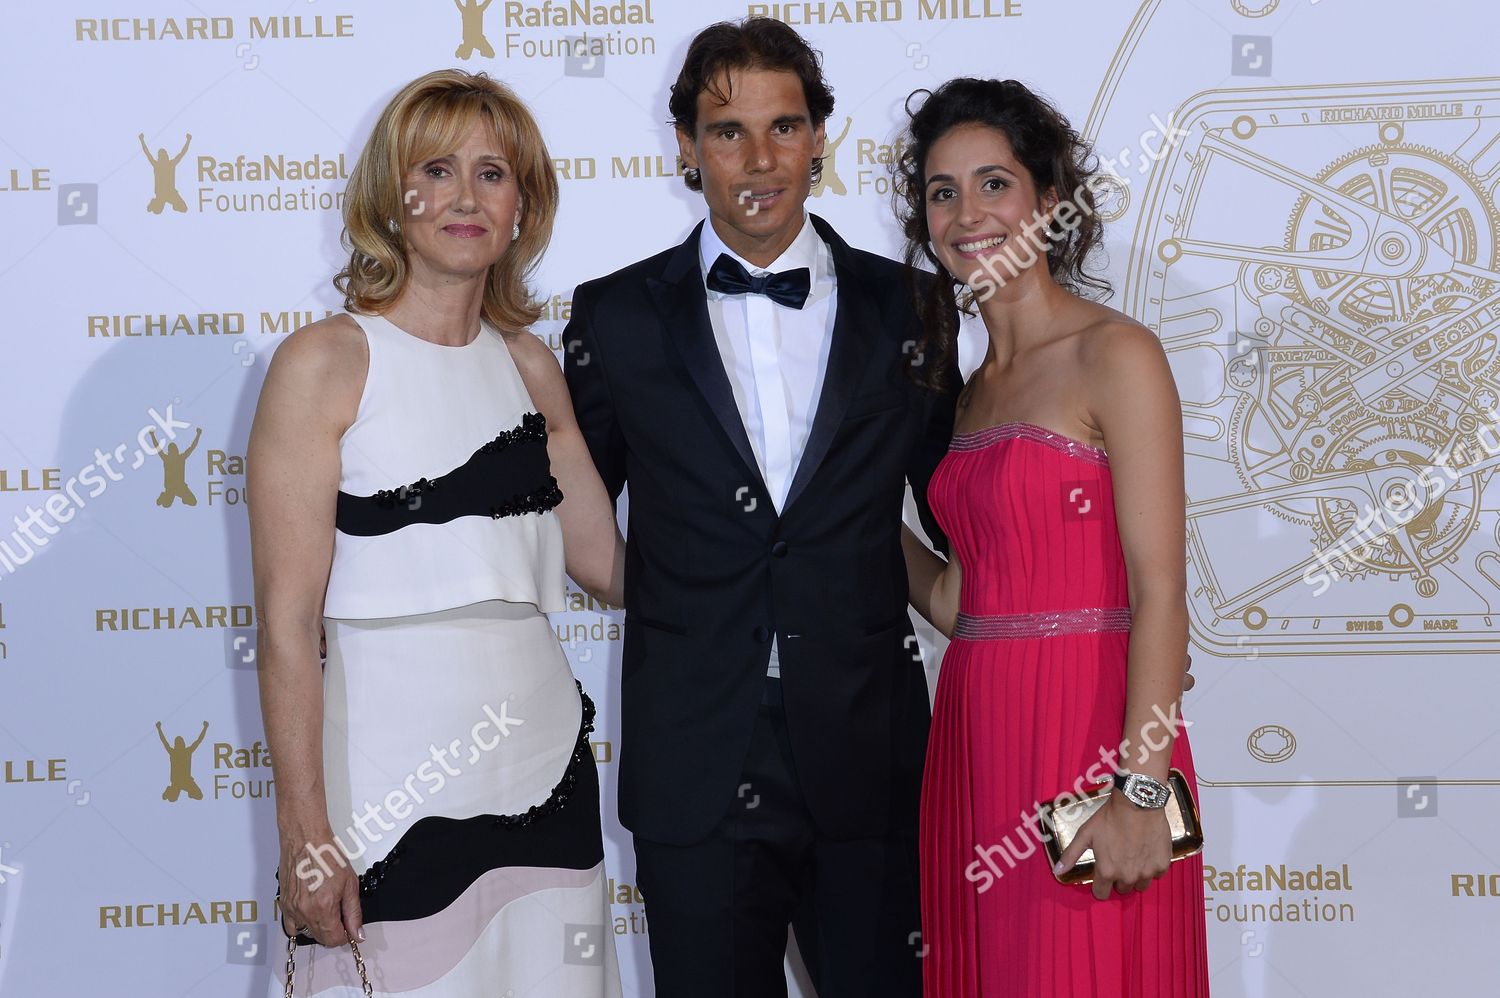 Rafael 'Rafa 'Nadal Parera foto de stock editorial. Imagem de